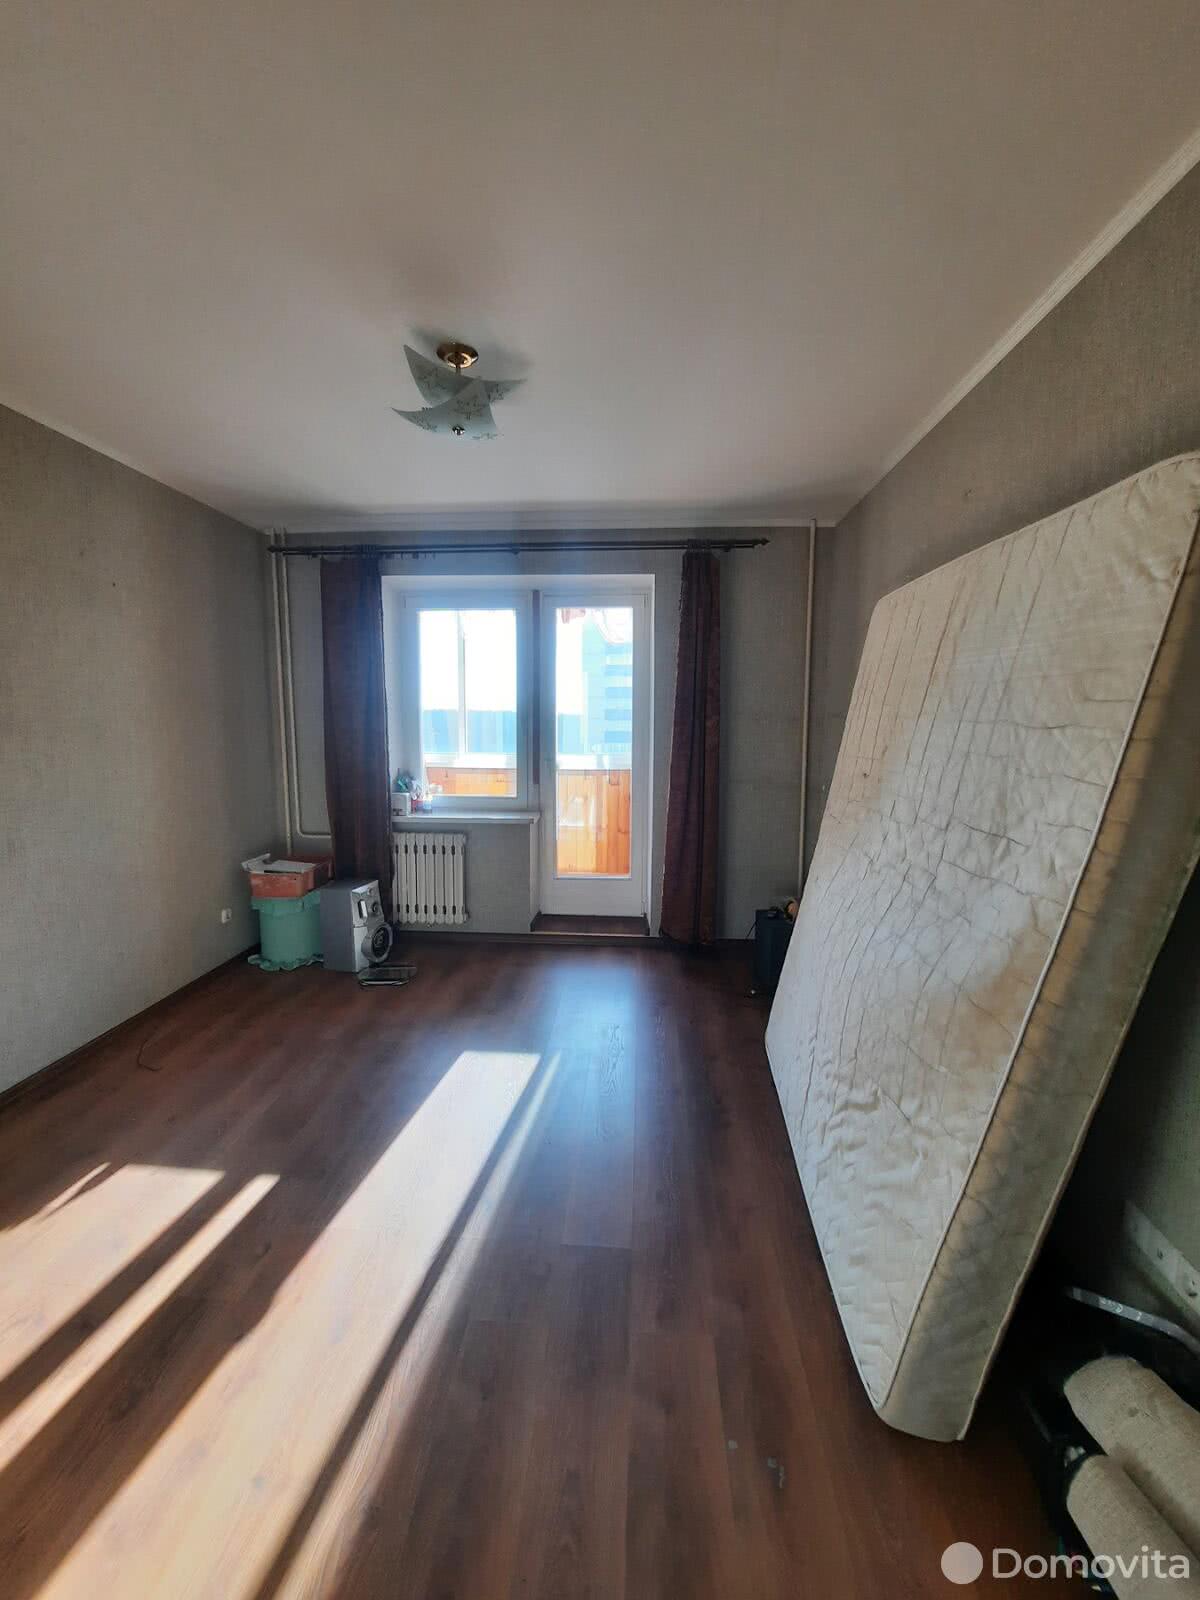 квартира, Витебск, ул. Чкалова, д. 60/1, стоимость продажи 163 458 р.